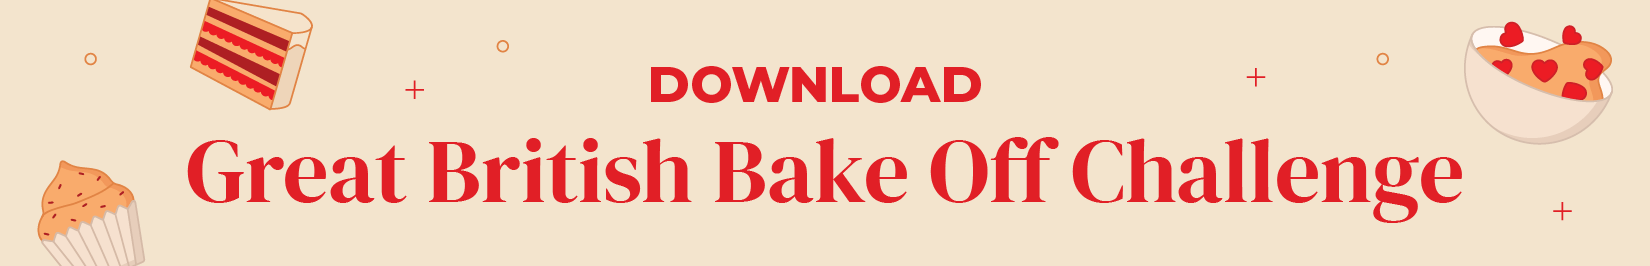 Great British Bake Off challenge recipe download button.